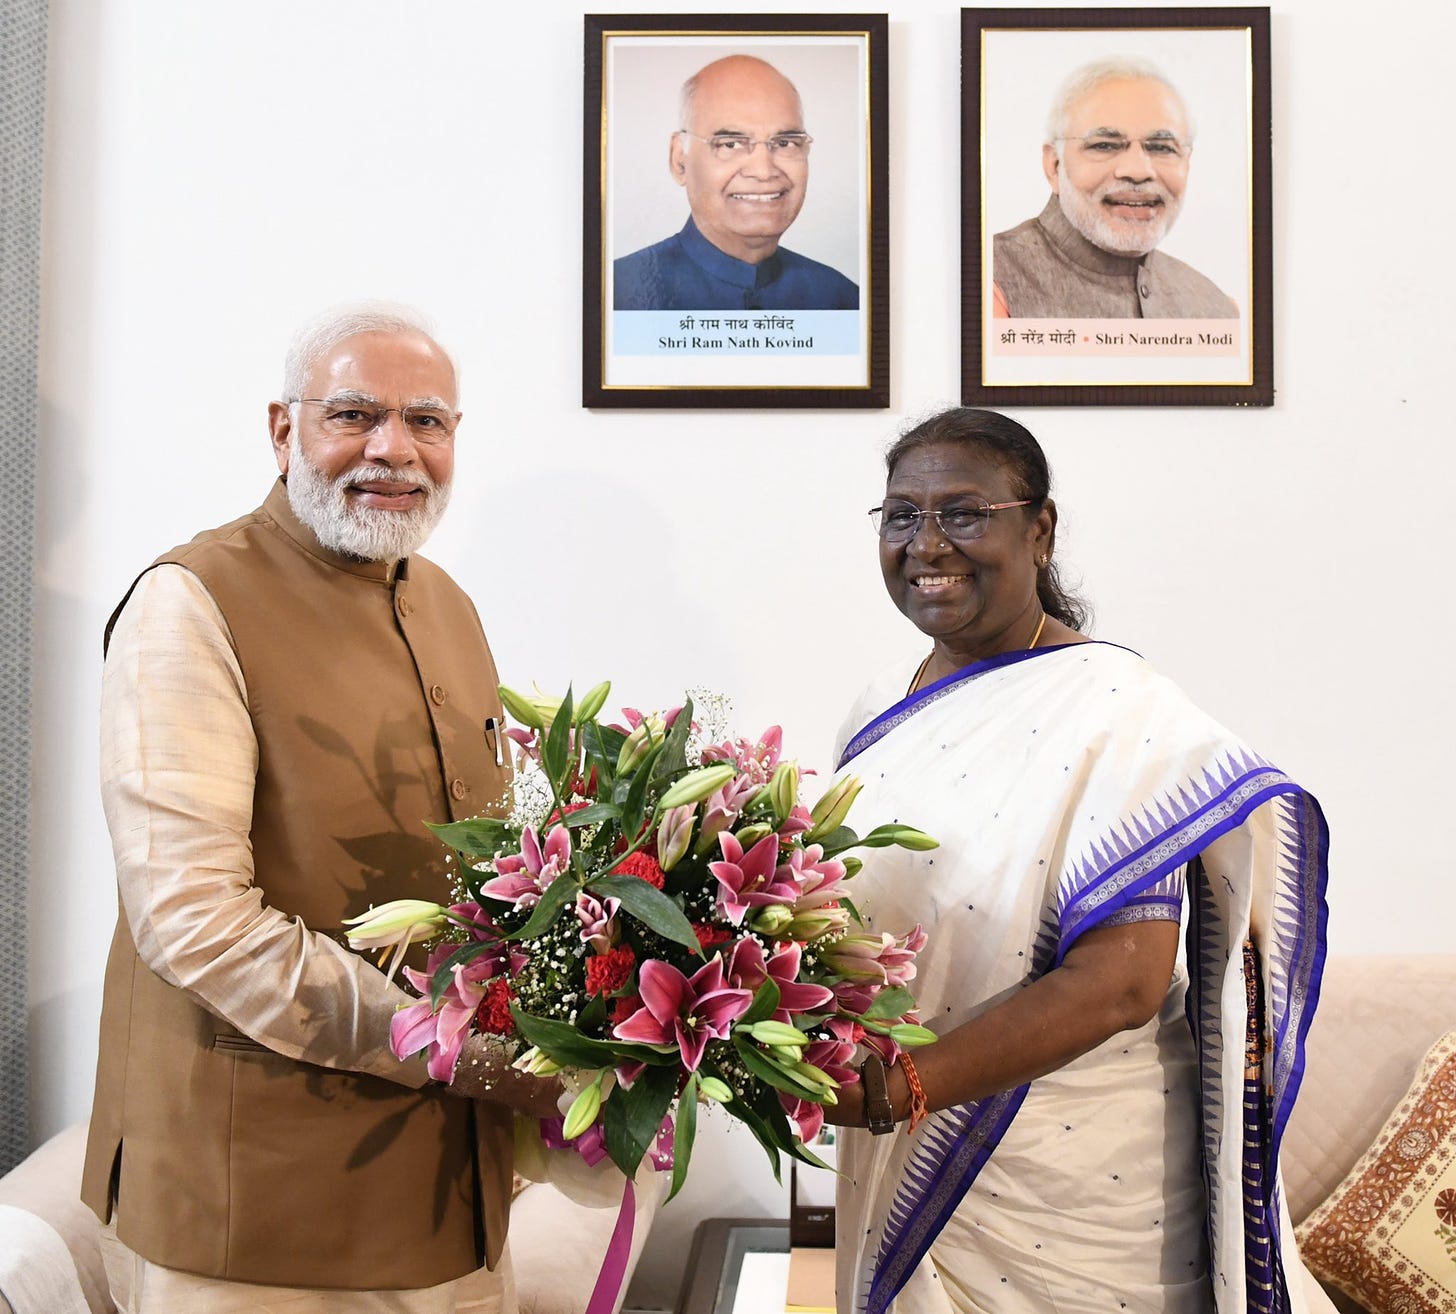 President-elect Droupadi Murmu (right) and Indian PM Narendra Modi (Image: Twitter/@narendramodi)